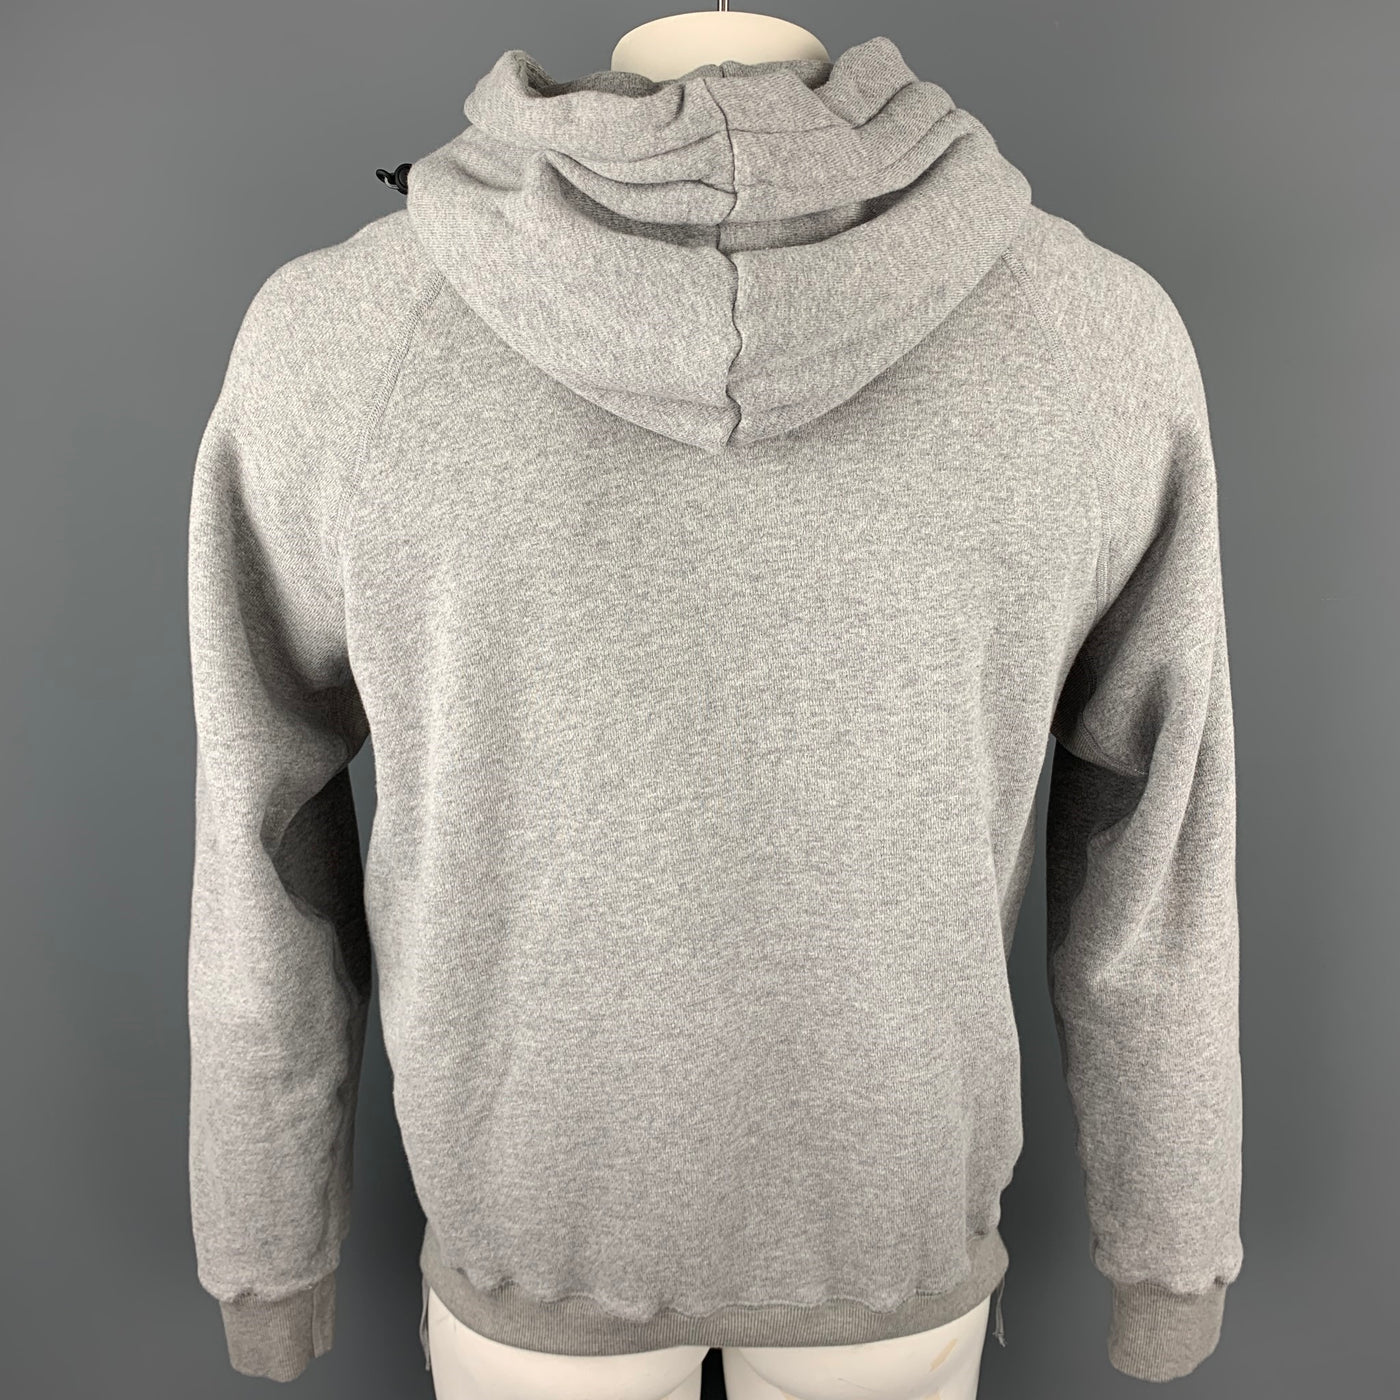 SATISFY Size L Light Gray Cotton Jogger Hooded Sweatshirt